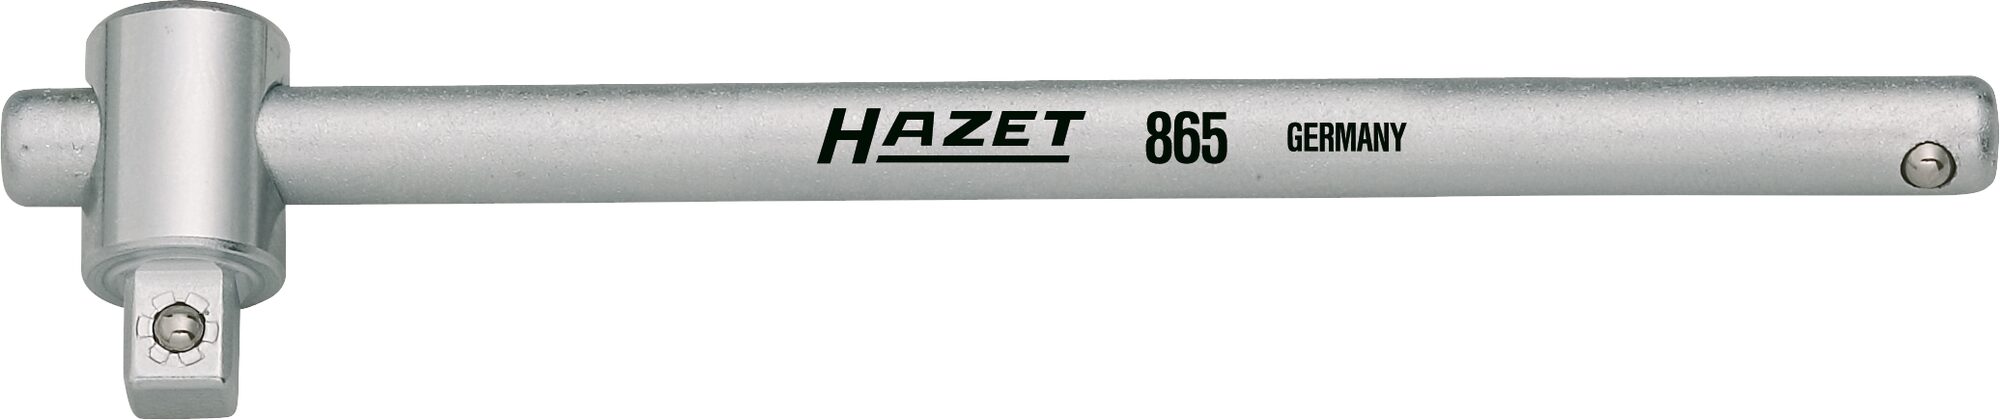 HAZET Quergriff 865 · Vierkant massiv 6,3 mm (1/4 Zoll)